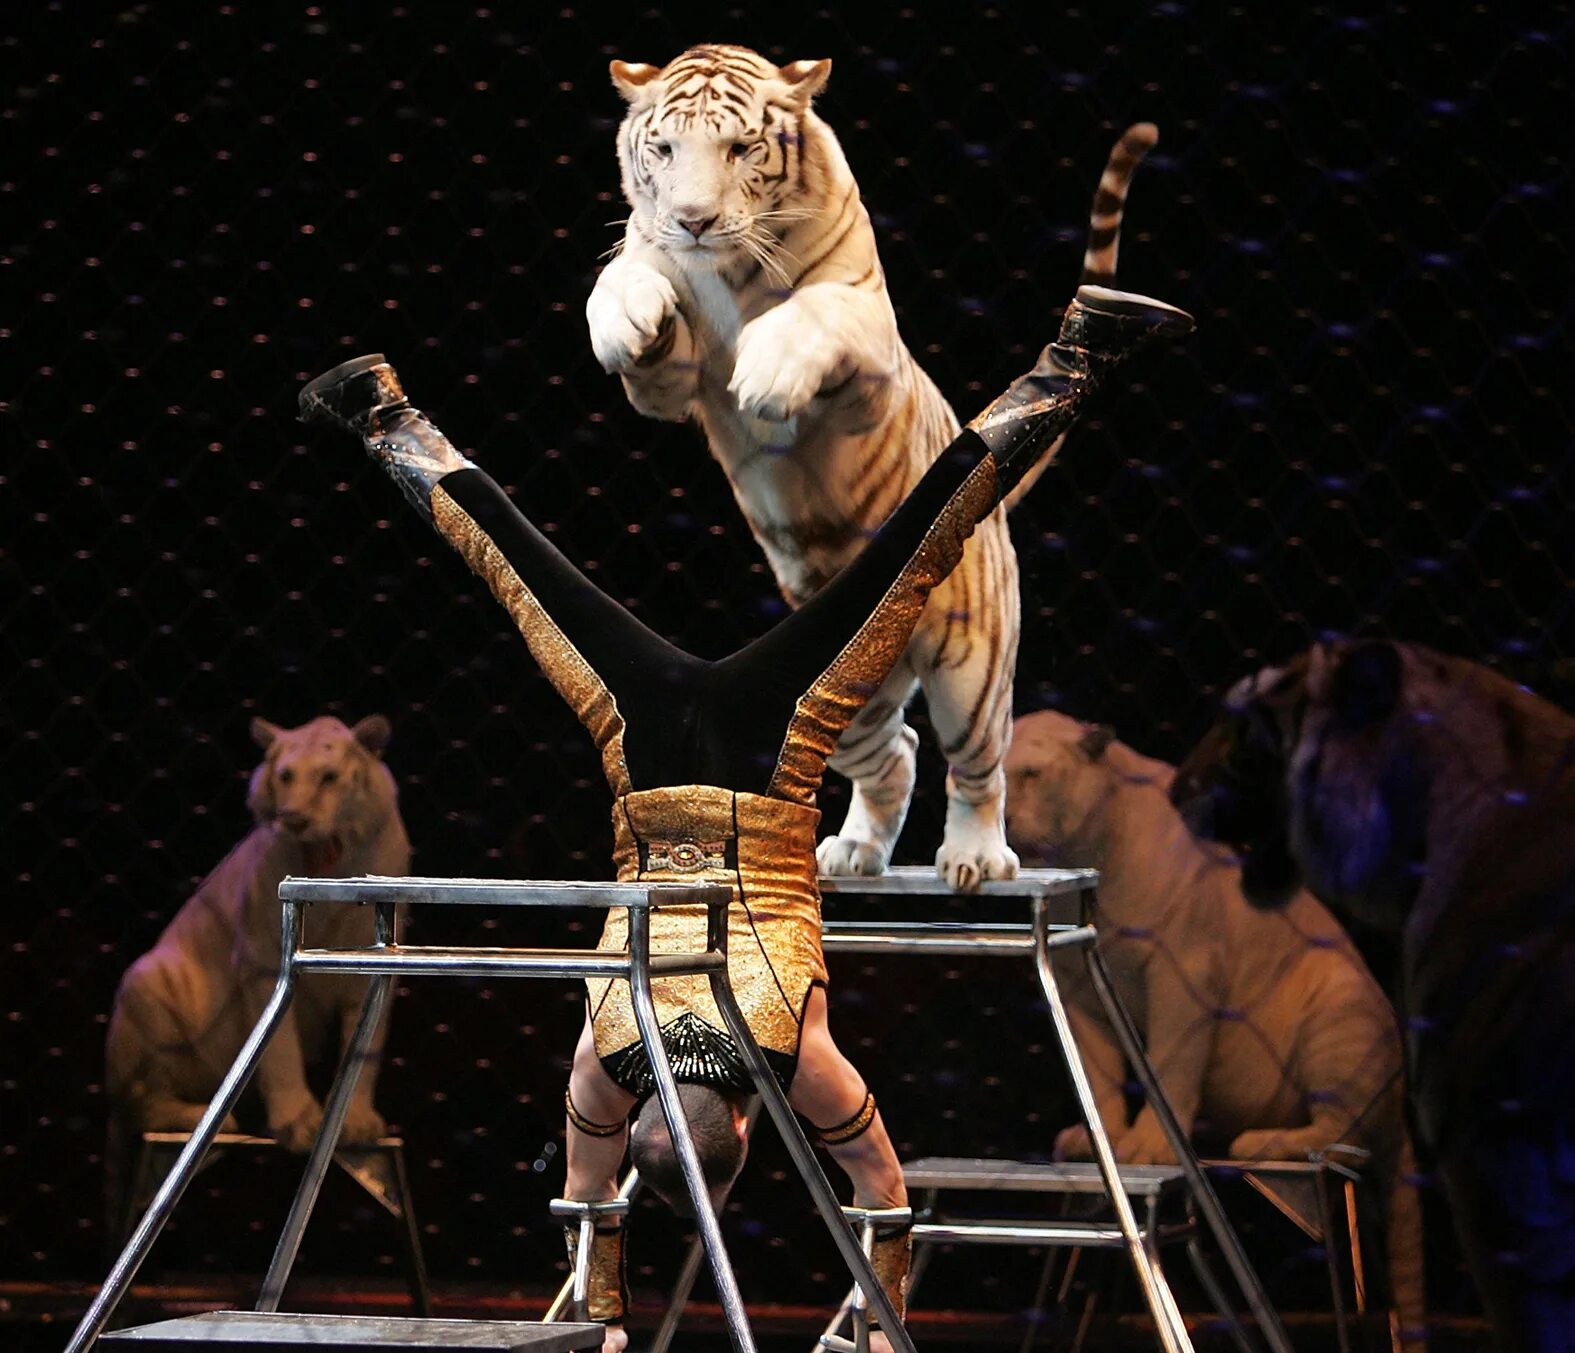 Картинки помни из цирка. Цирковое представление с тиграми. Тигры на арене цирка. Злой дрессировщик. Трюки с тиграми в цирке.